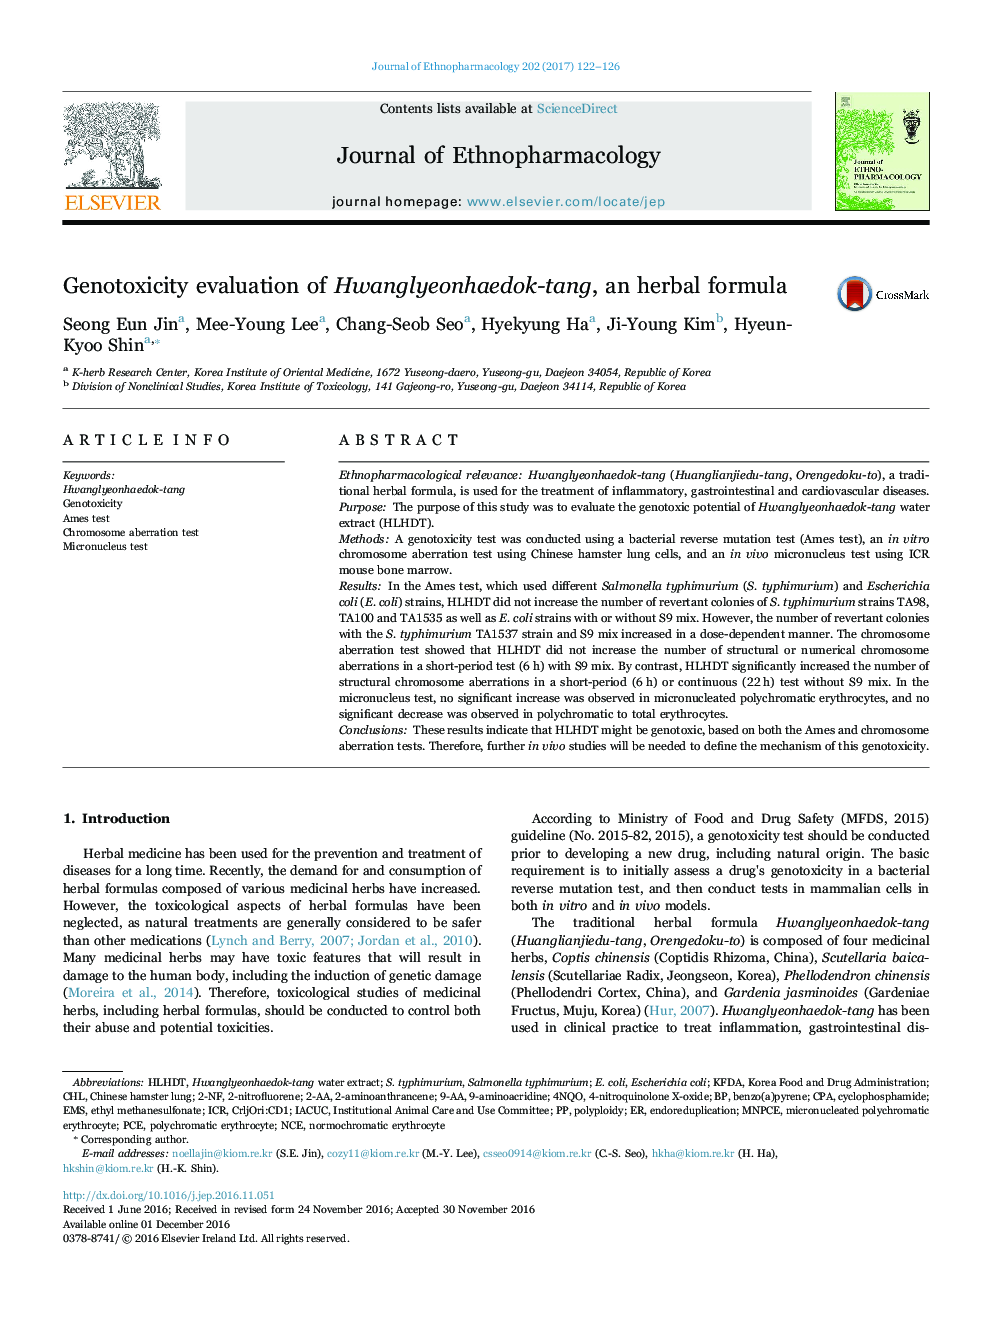 Genotoxicity evaluation of Hwanglyeonhaedok-tang, an herbal formula